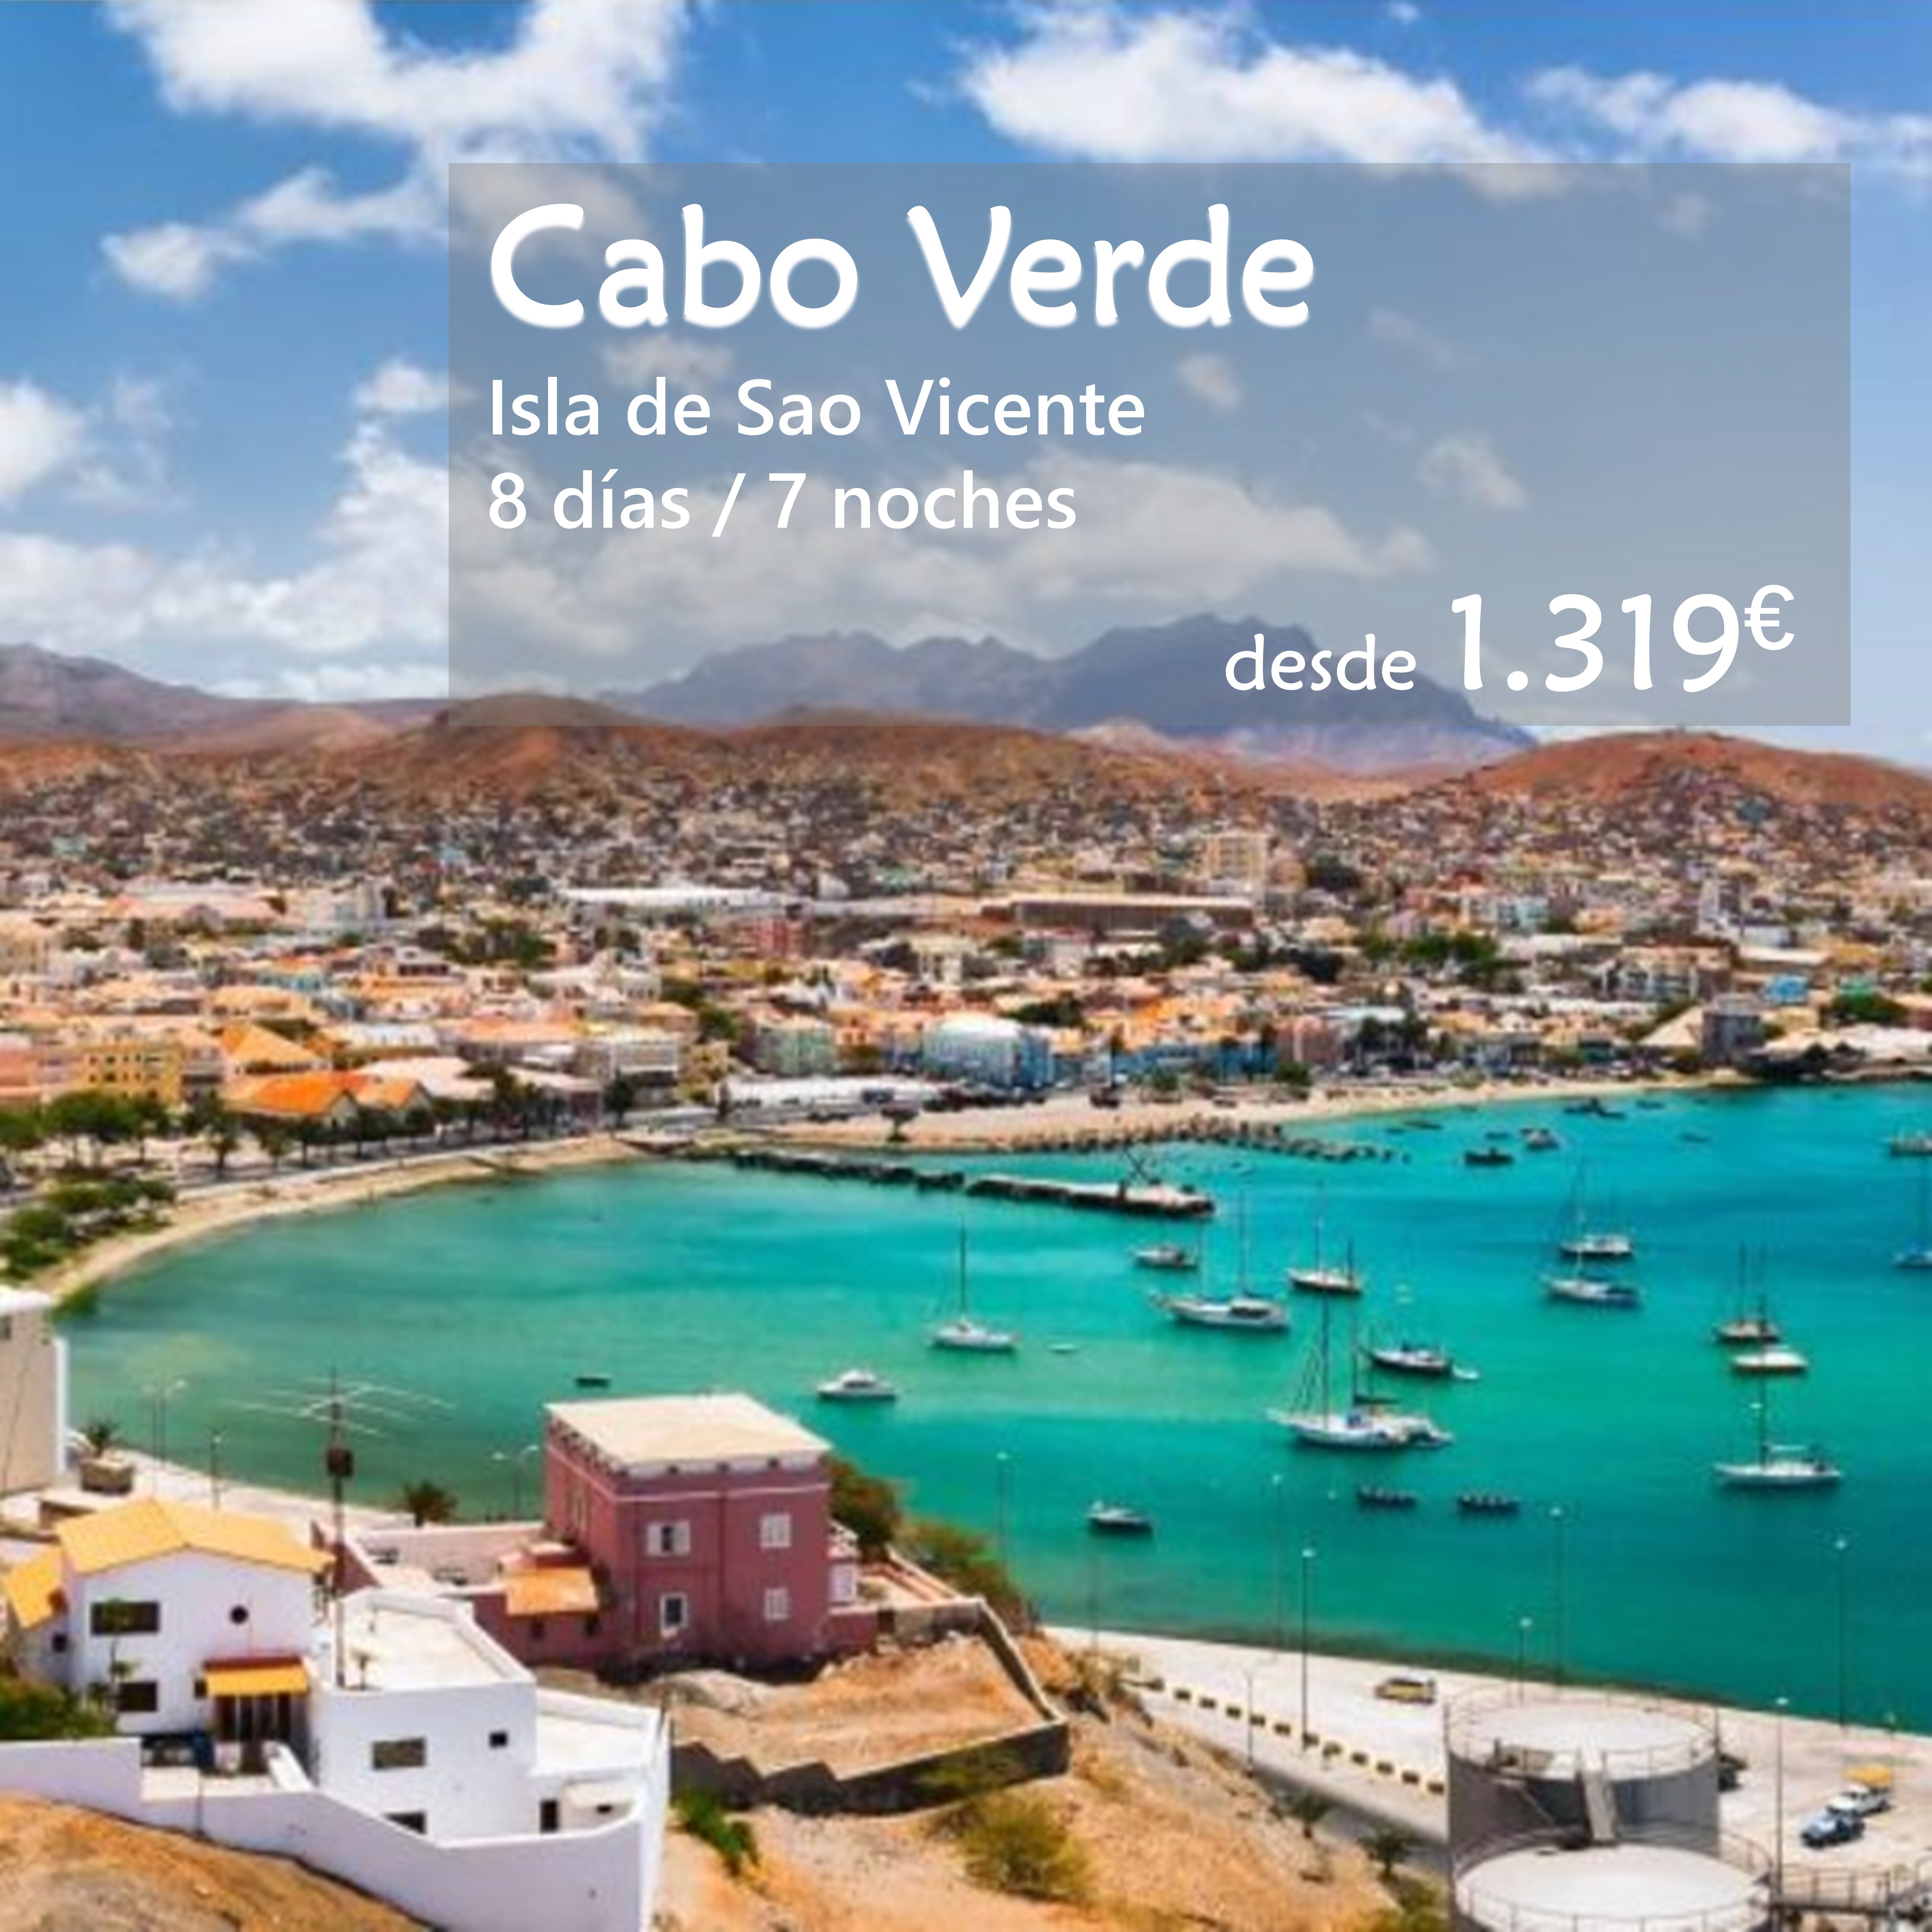 Cabo Verde - Isla de Sao Vicente